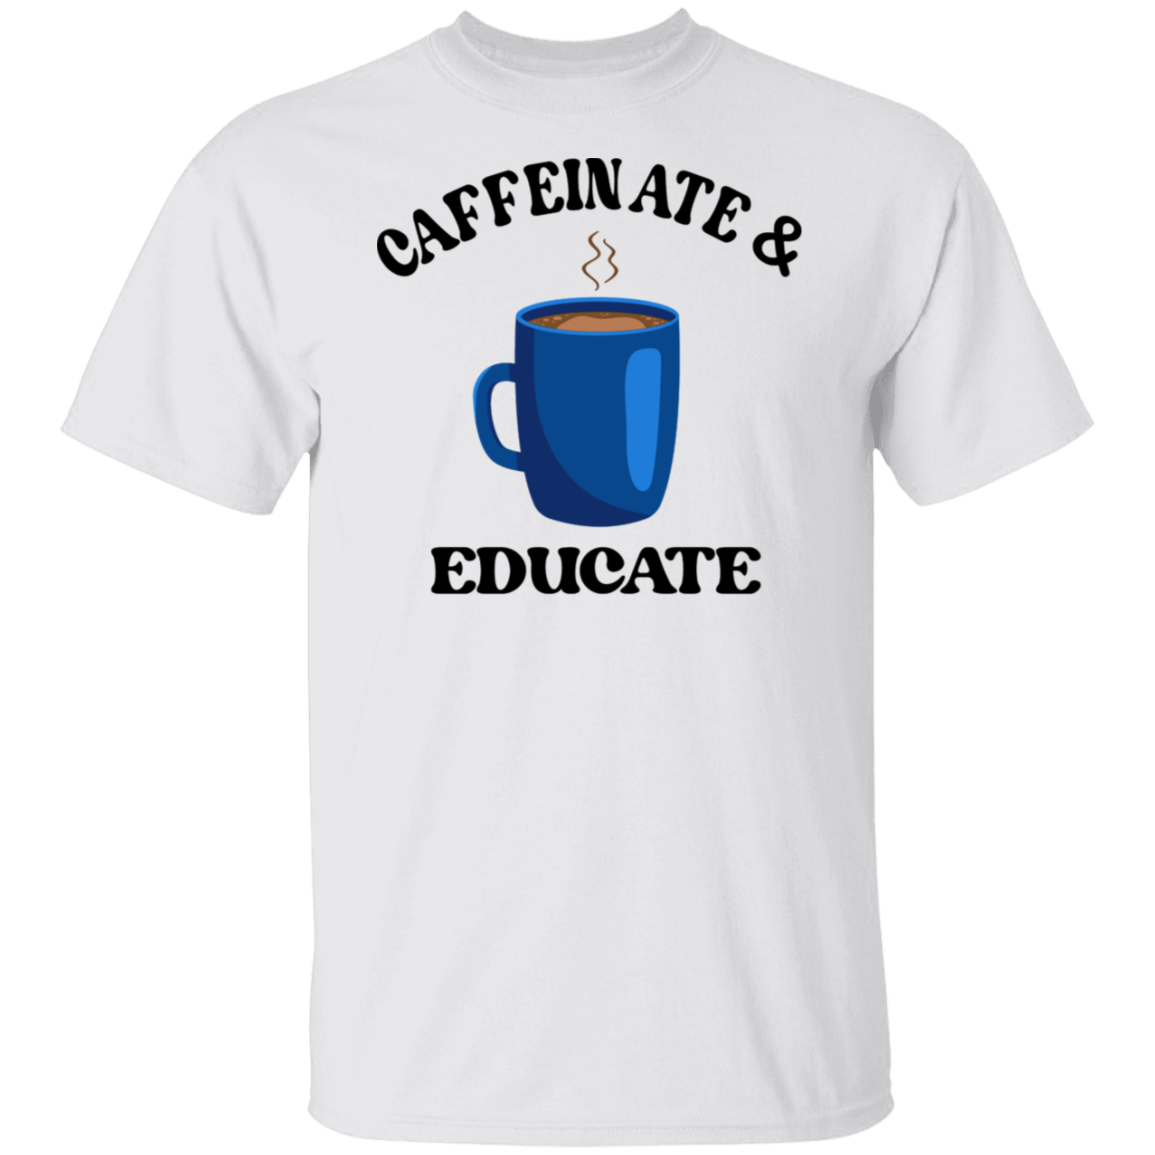 Caffeinate & Educate T-Shirt